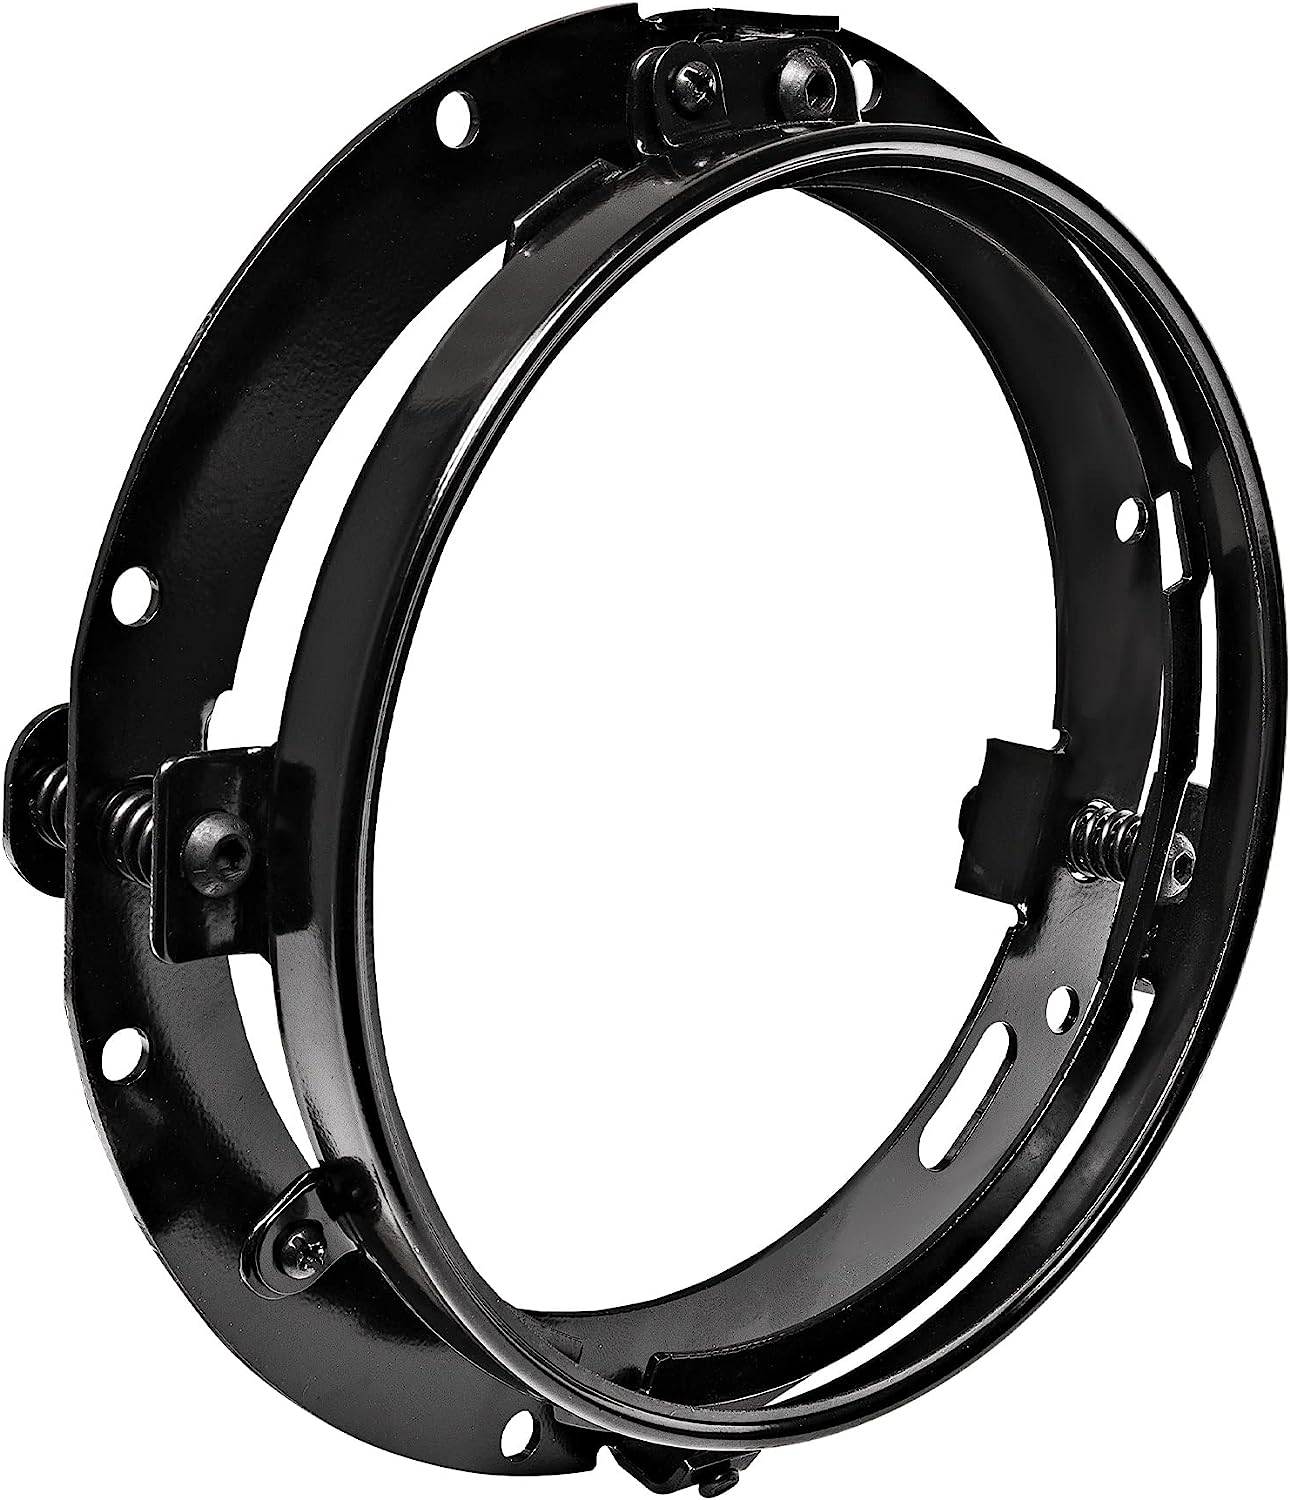 7 Inch Round Headlight Adapter Ring Mounting Bracket 